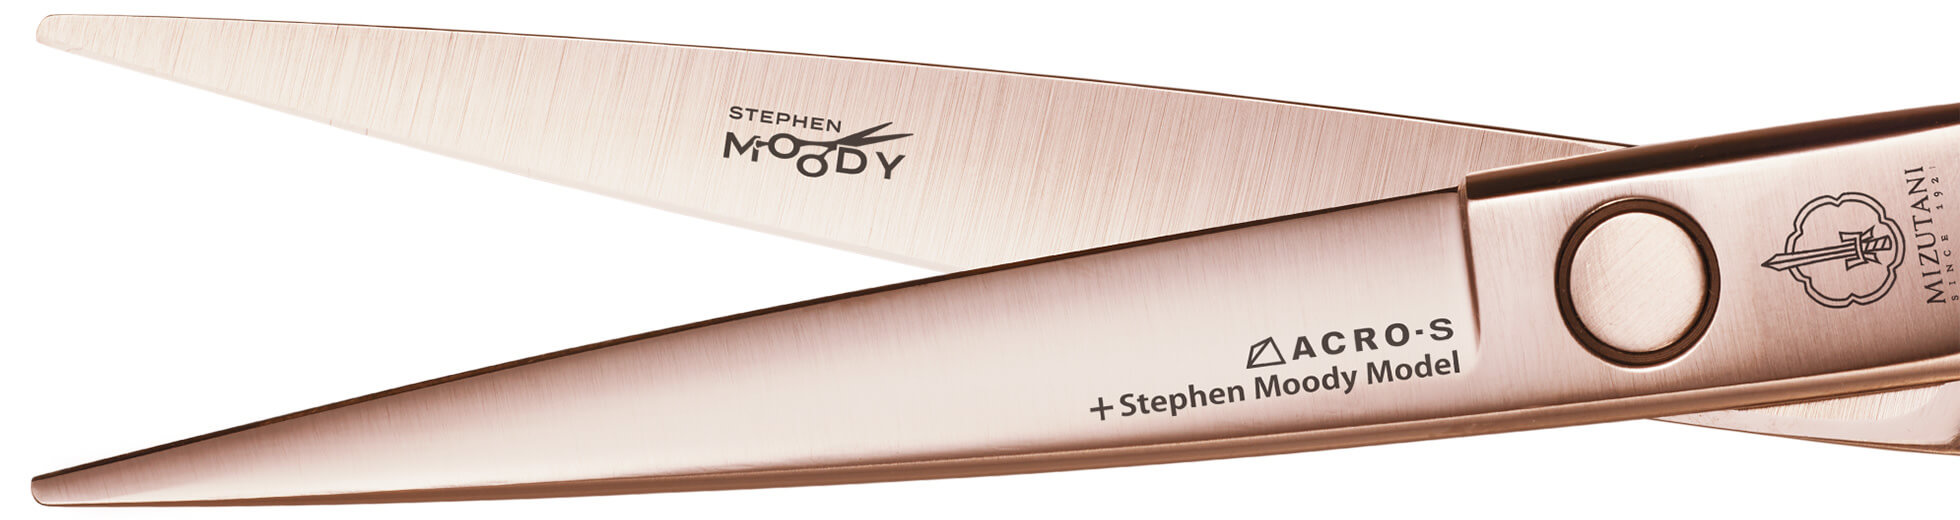 Stephen Moody Model